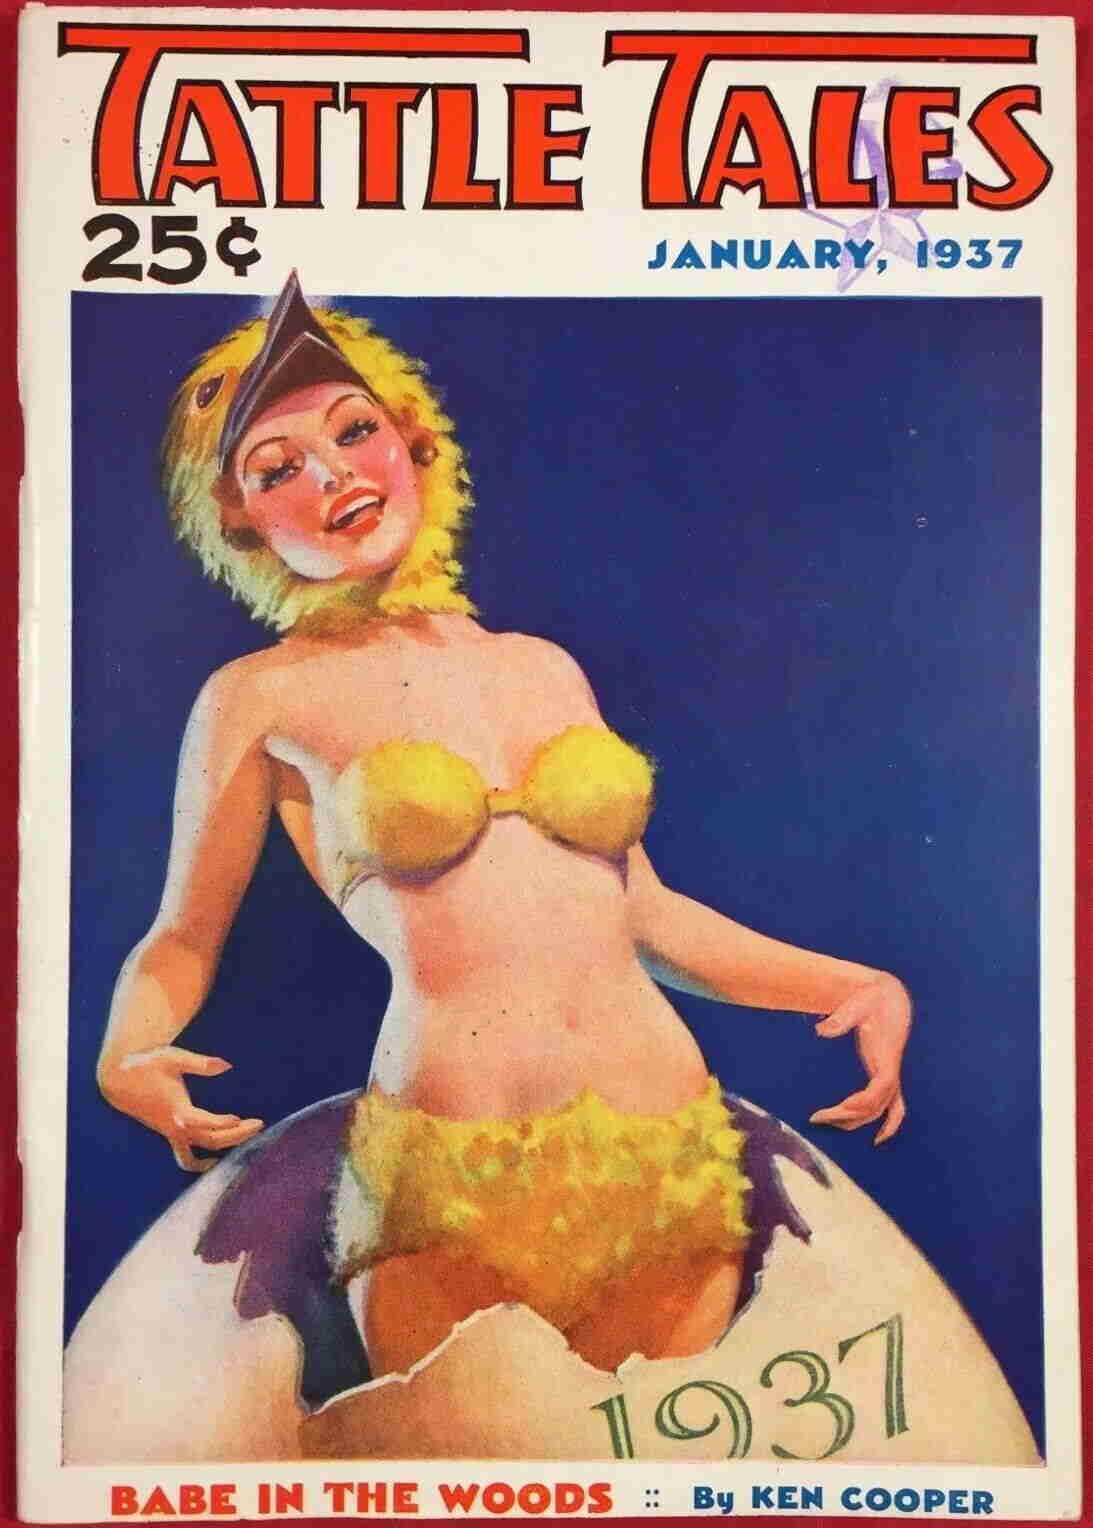 Tattle Tales - January 1937